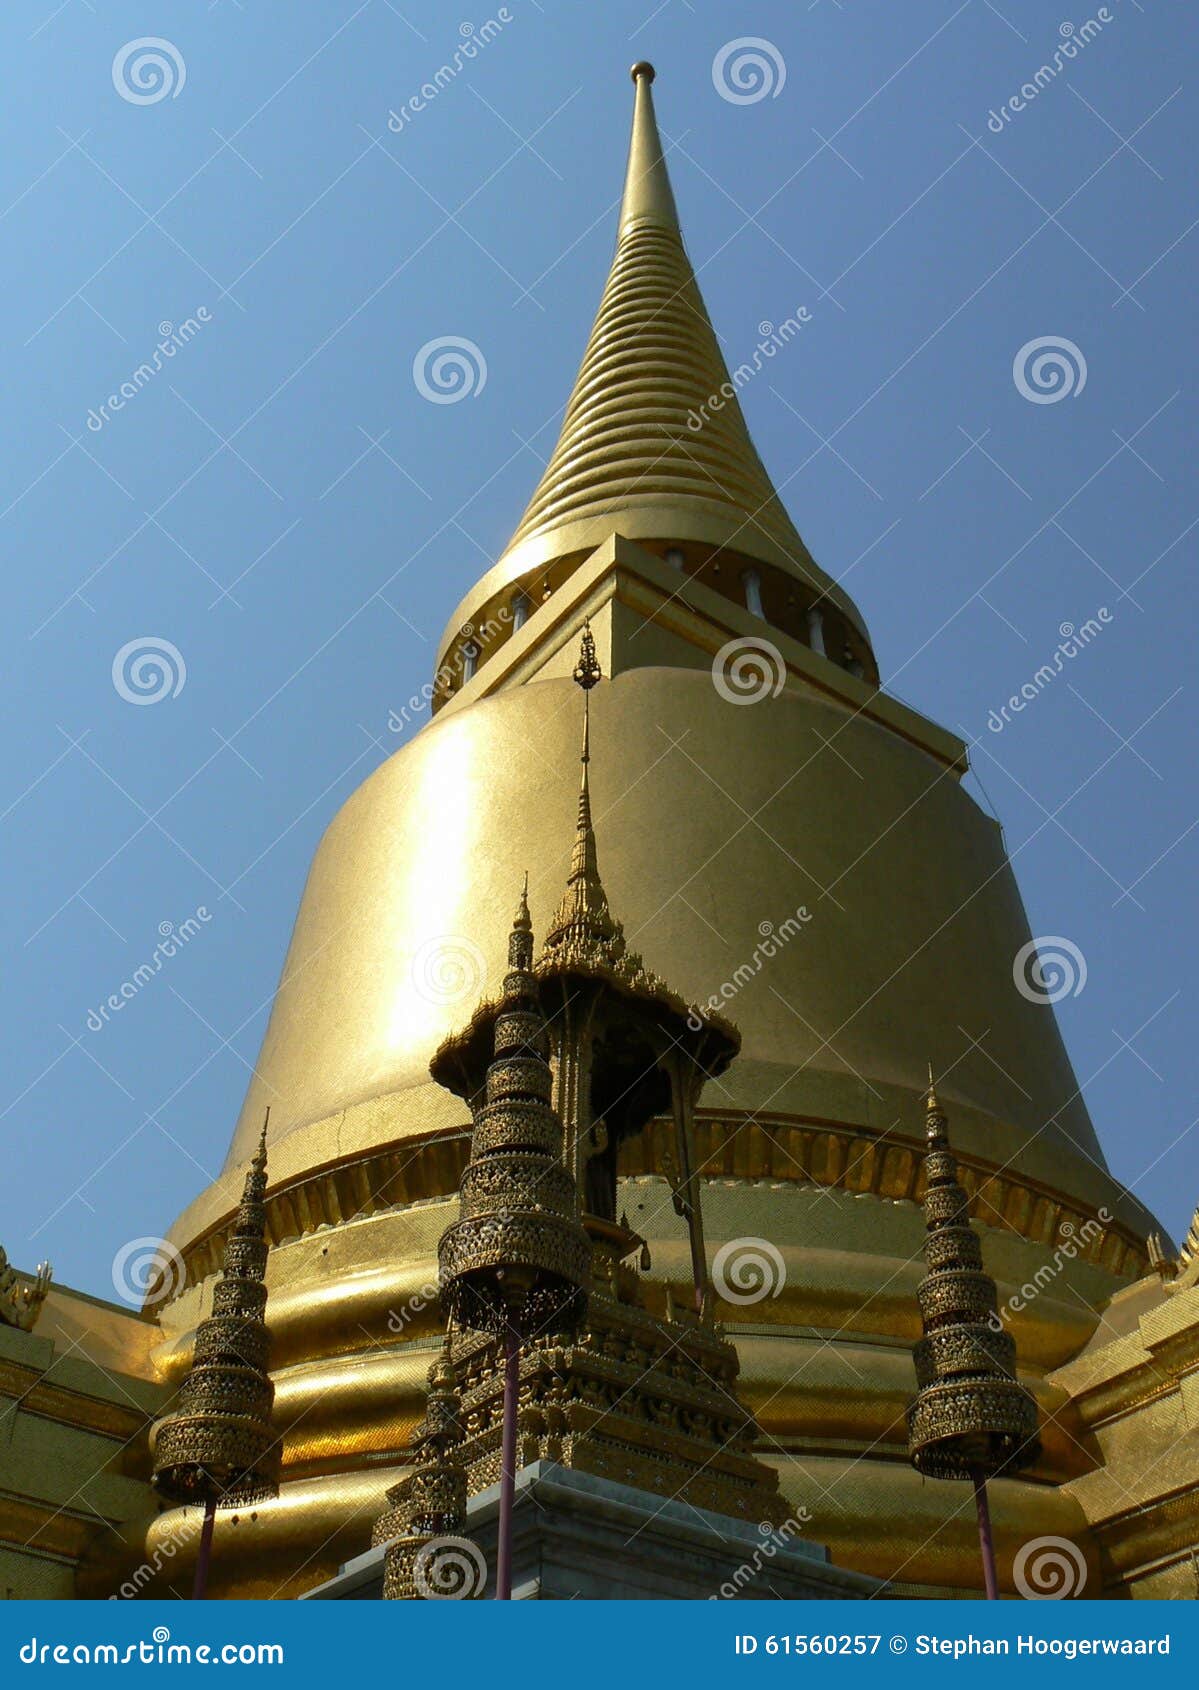 golden chedi, wat phra keaw temple, bangkok, thailand